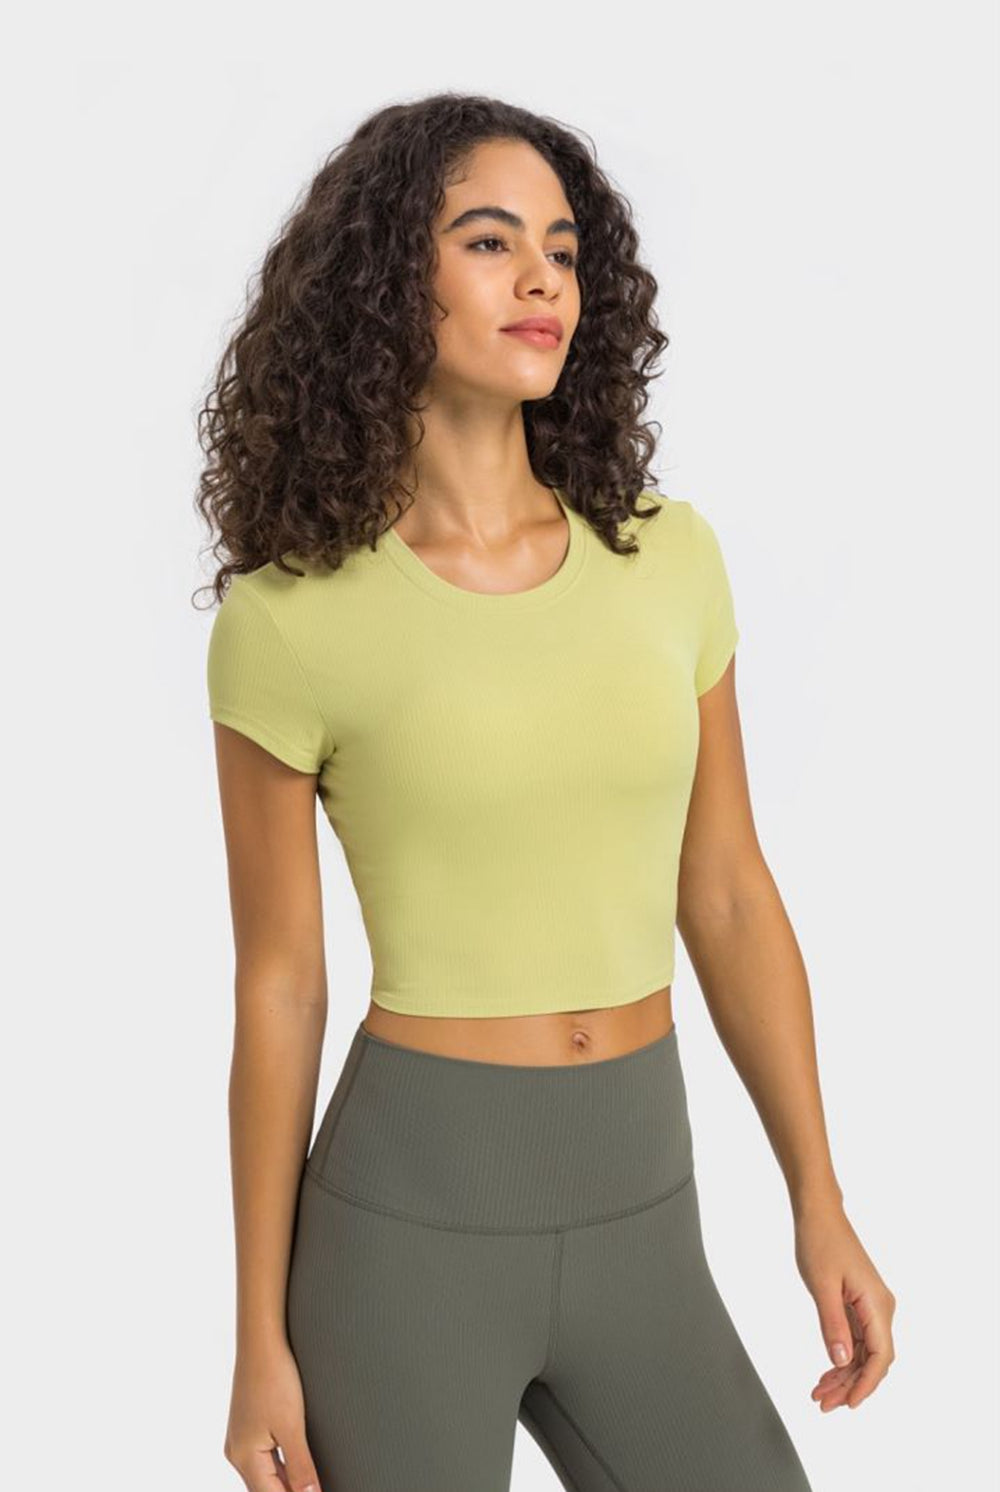 Dark Olive Green Round Neck Short Sleeve Cropped Sports T-Shirt activewear